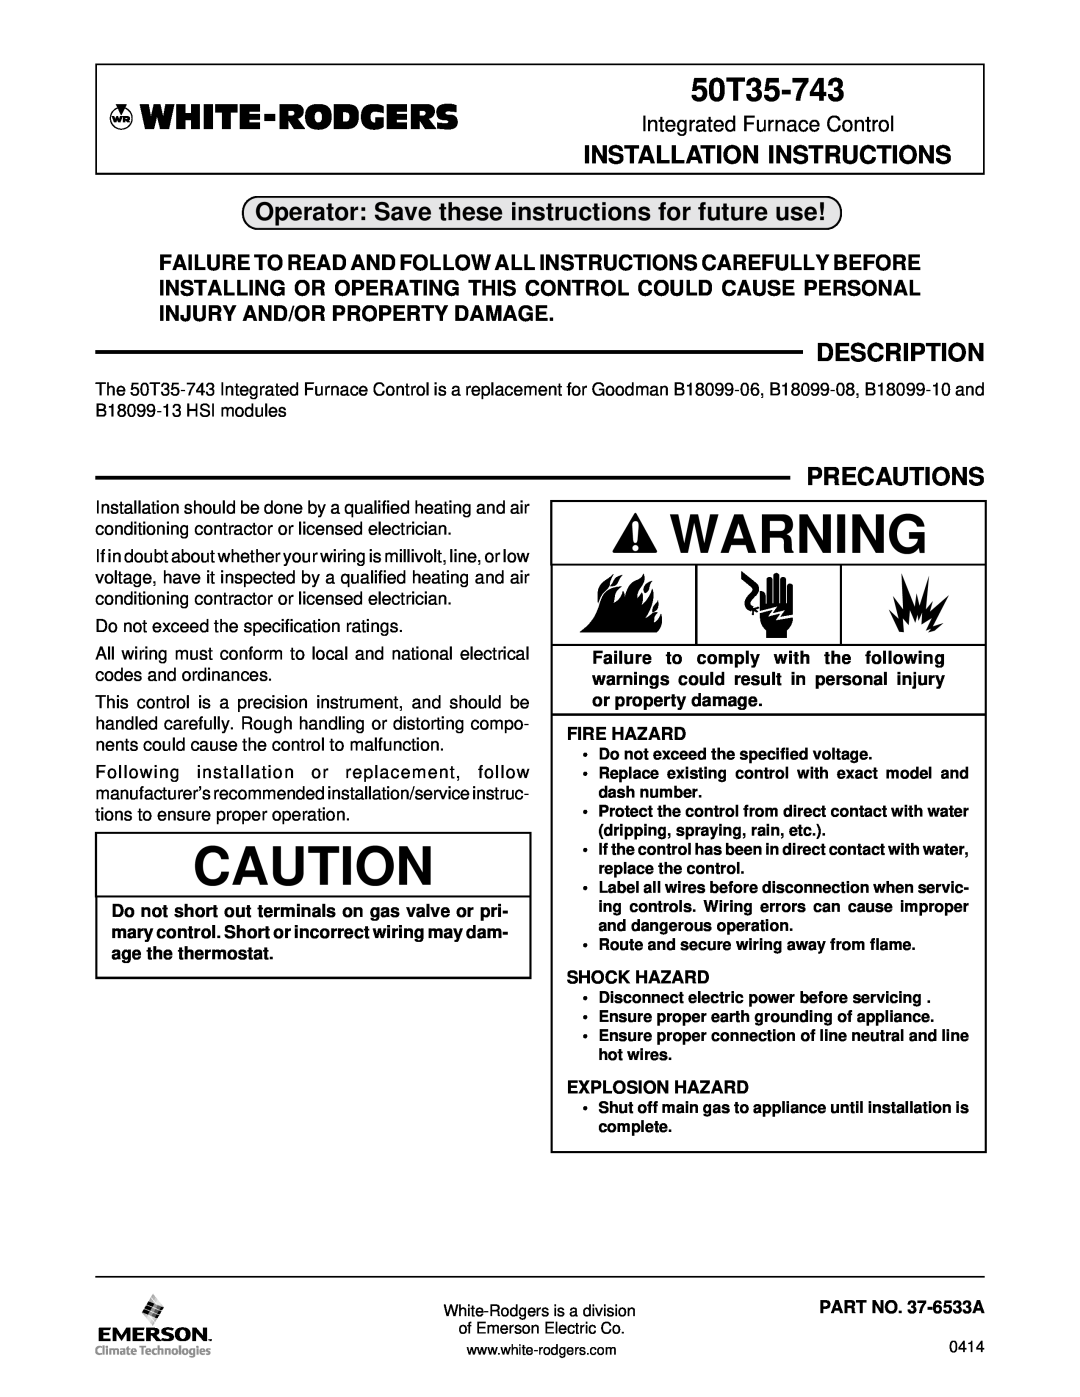 White Rodgers 50T35-743 installation instructions Installation Instructions, Description, Precautions, Fire Hazard 